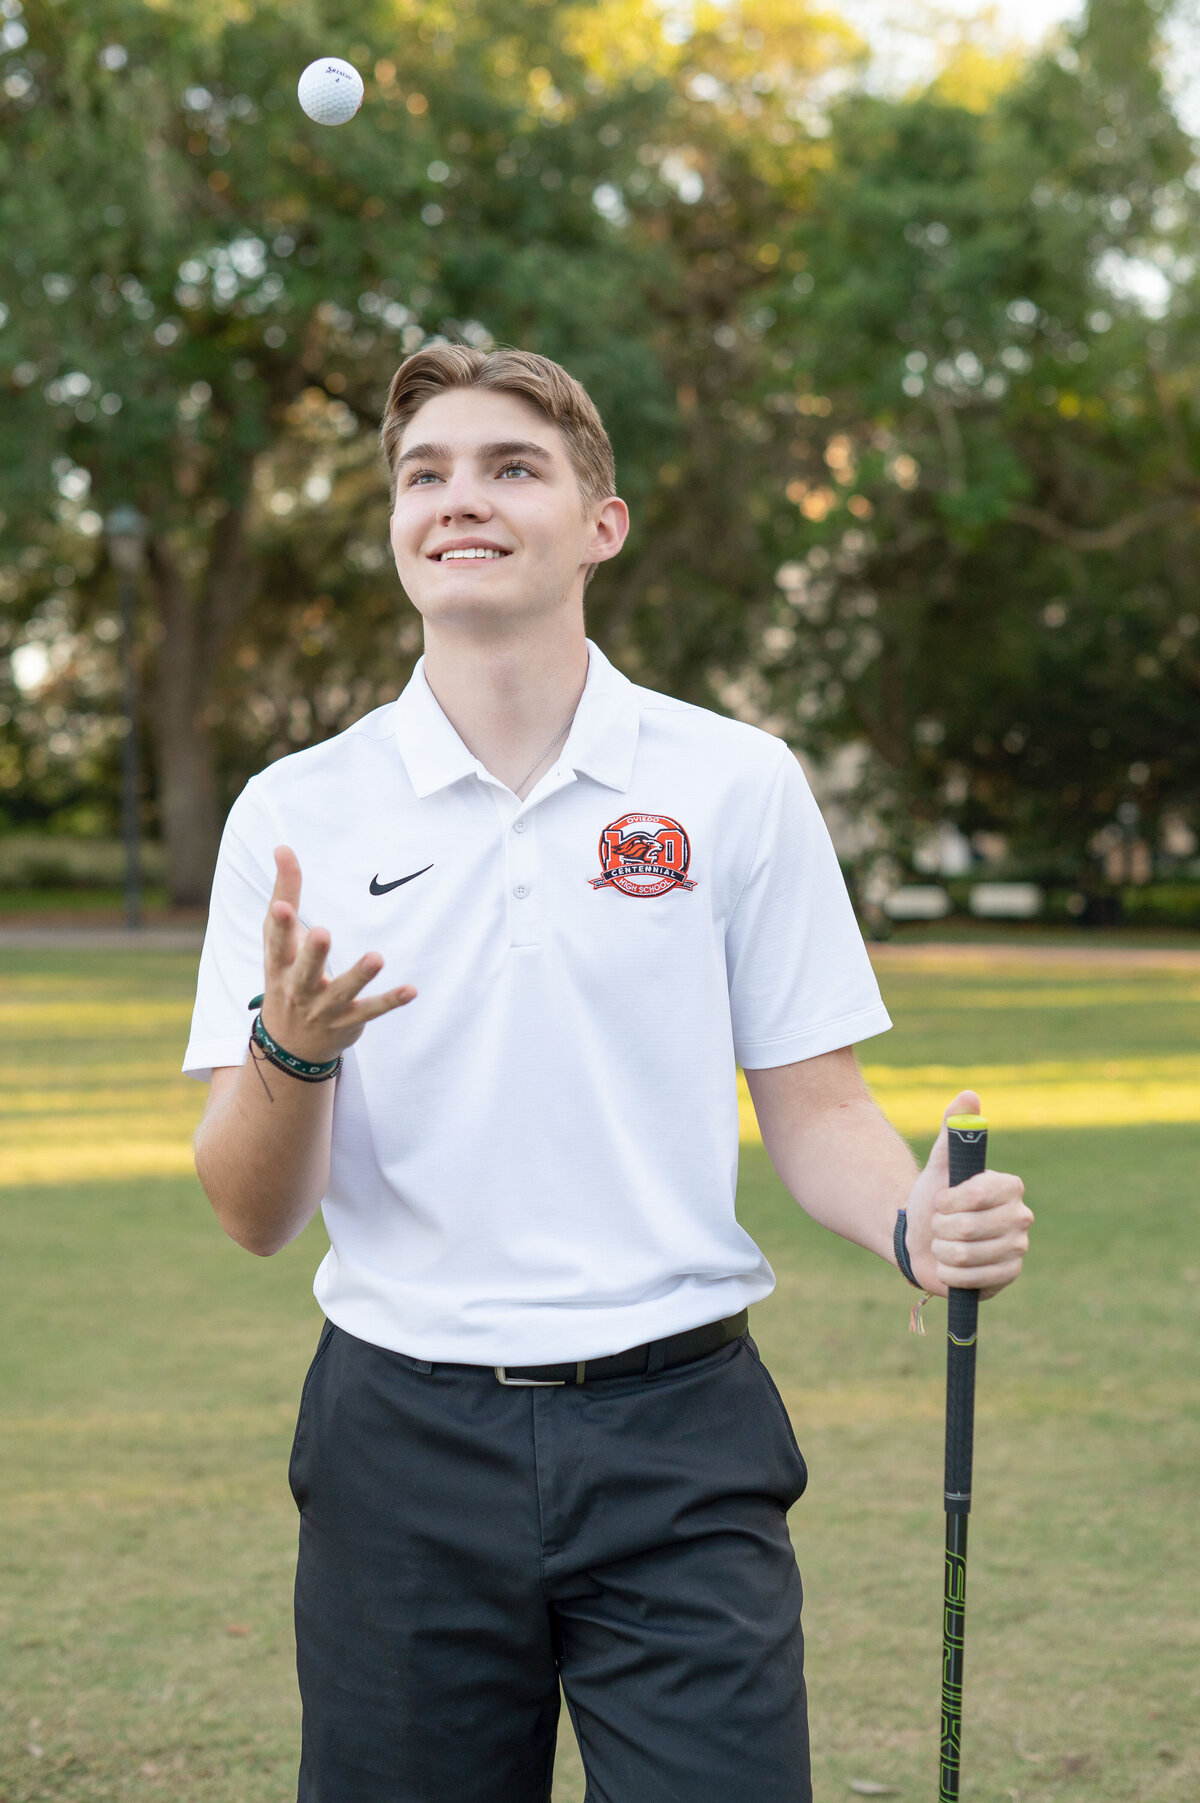 High school senior boy holding golf club throws golf ball into the air.